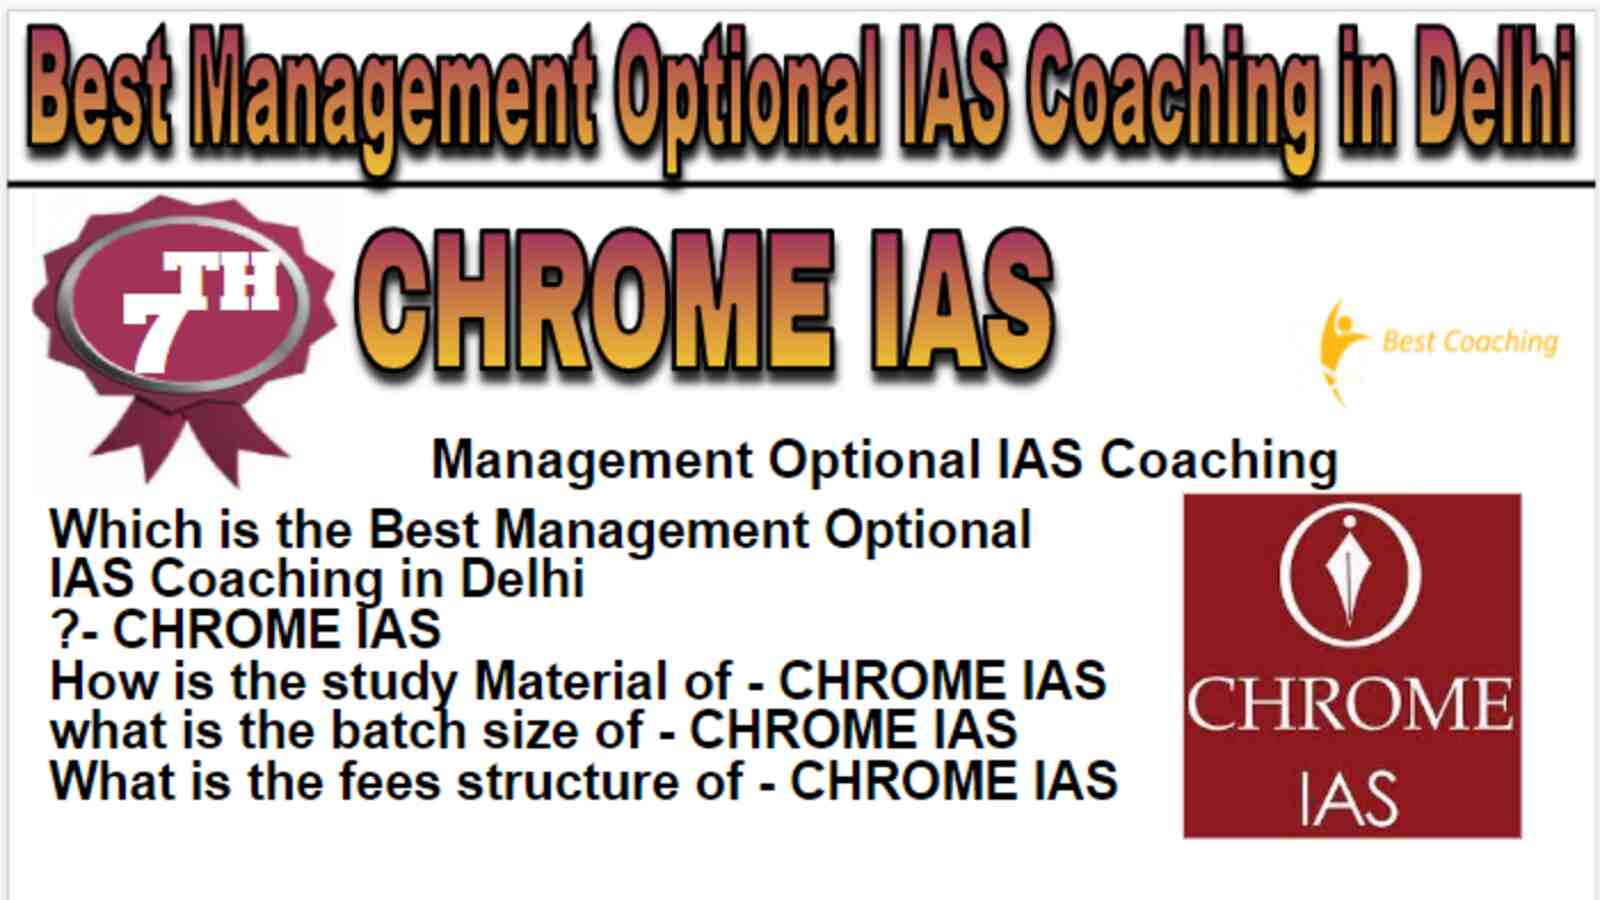 Best Management Optional IAS Coaching in Delhi